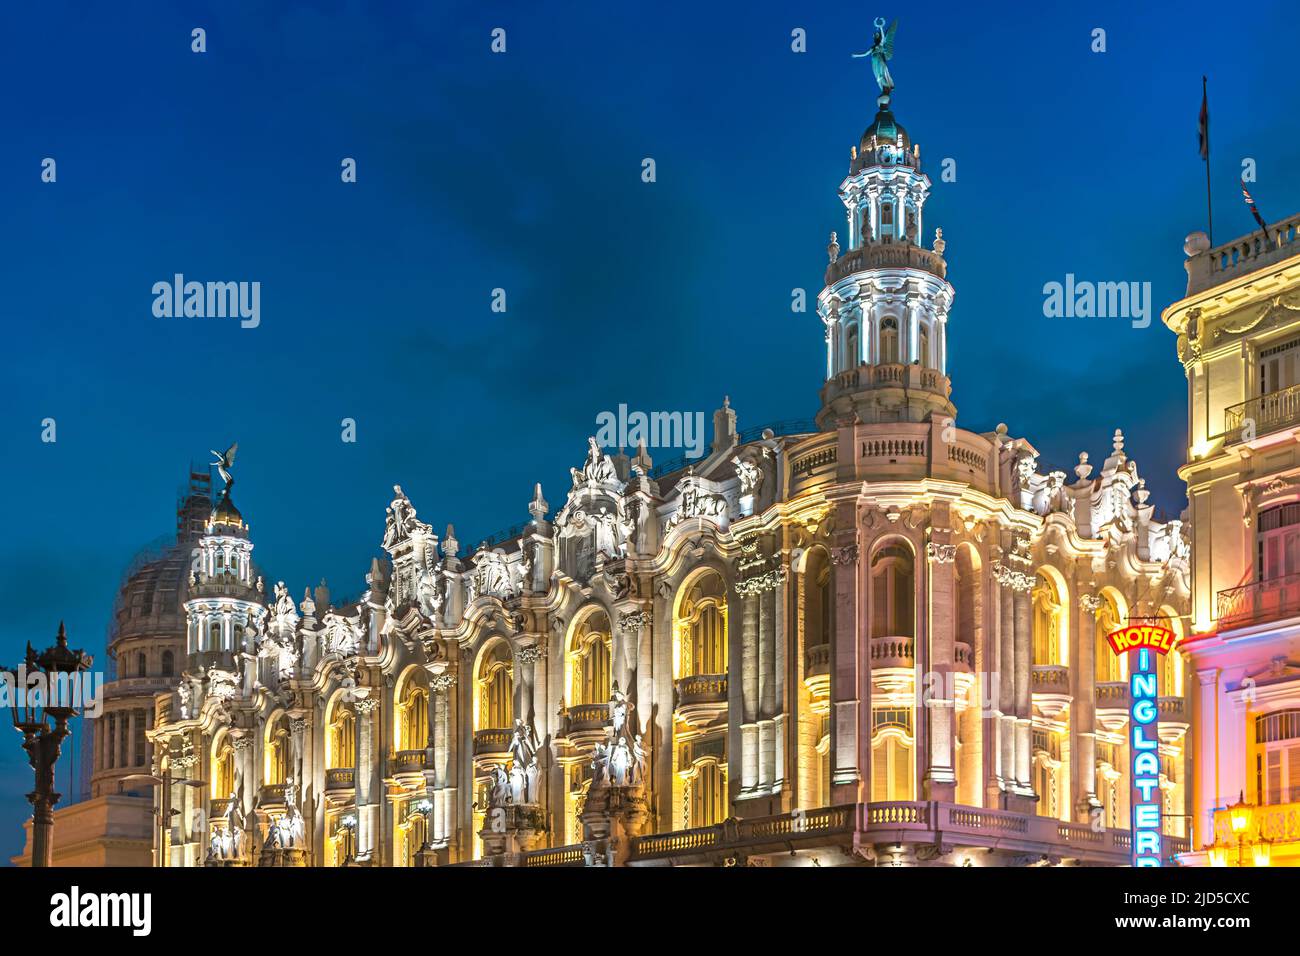 The beautiful illuminated Gran Teatro de la Habana in Havana, Cuba Stock Photo